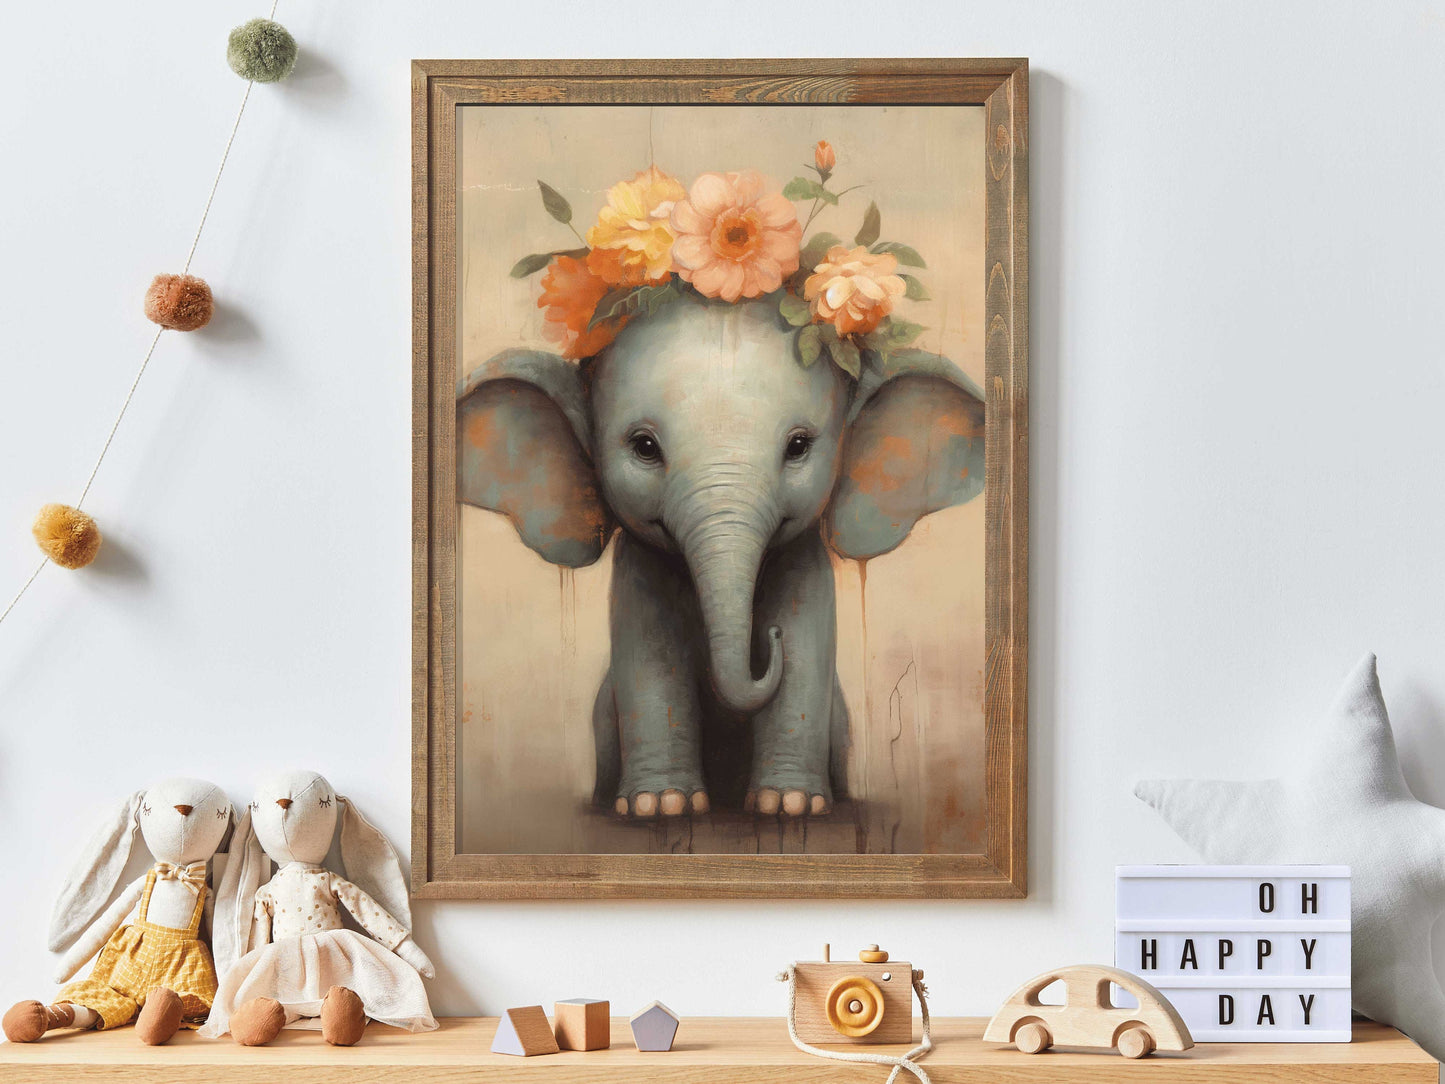 Vintage Nursery Animal Art, Baby Elephant with Flower Crown, Safari Animal Kids Room Decor, Cute Animal Girl's Room Print, Digital Art